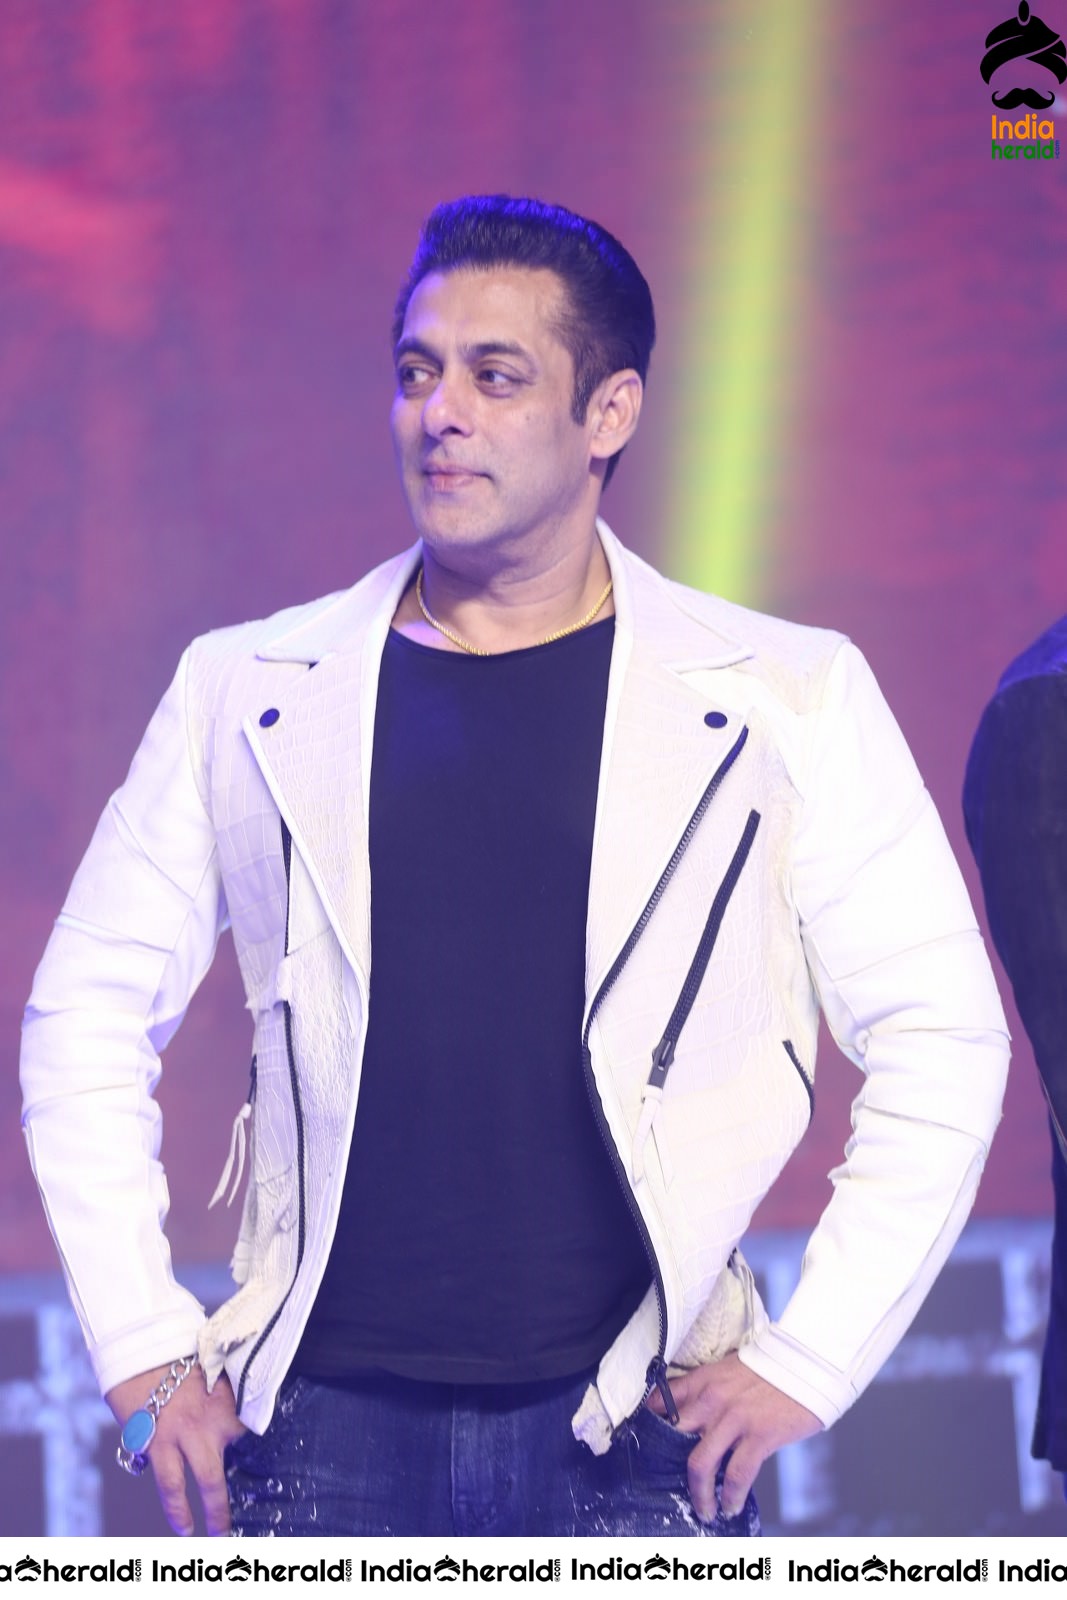 Actor Salman Khan Looking Stylish in these Latest Stills Set 2